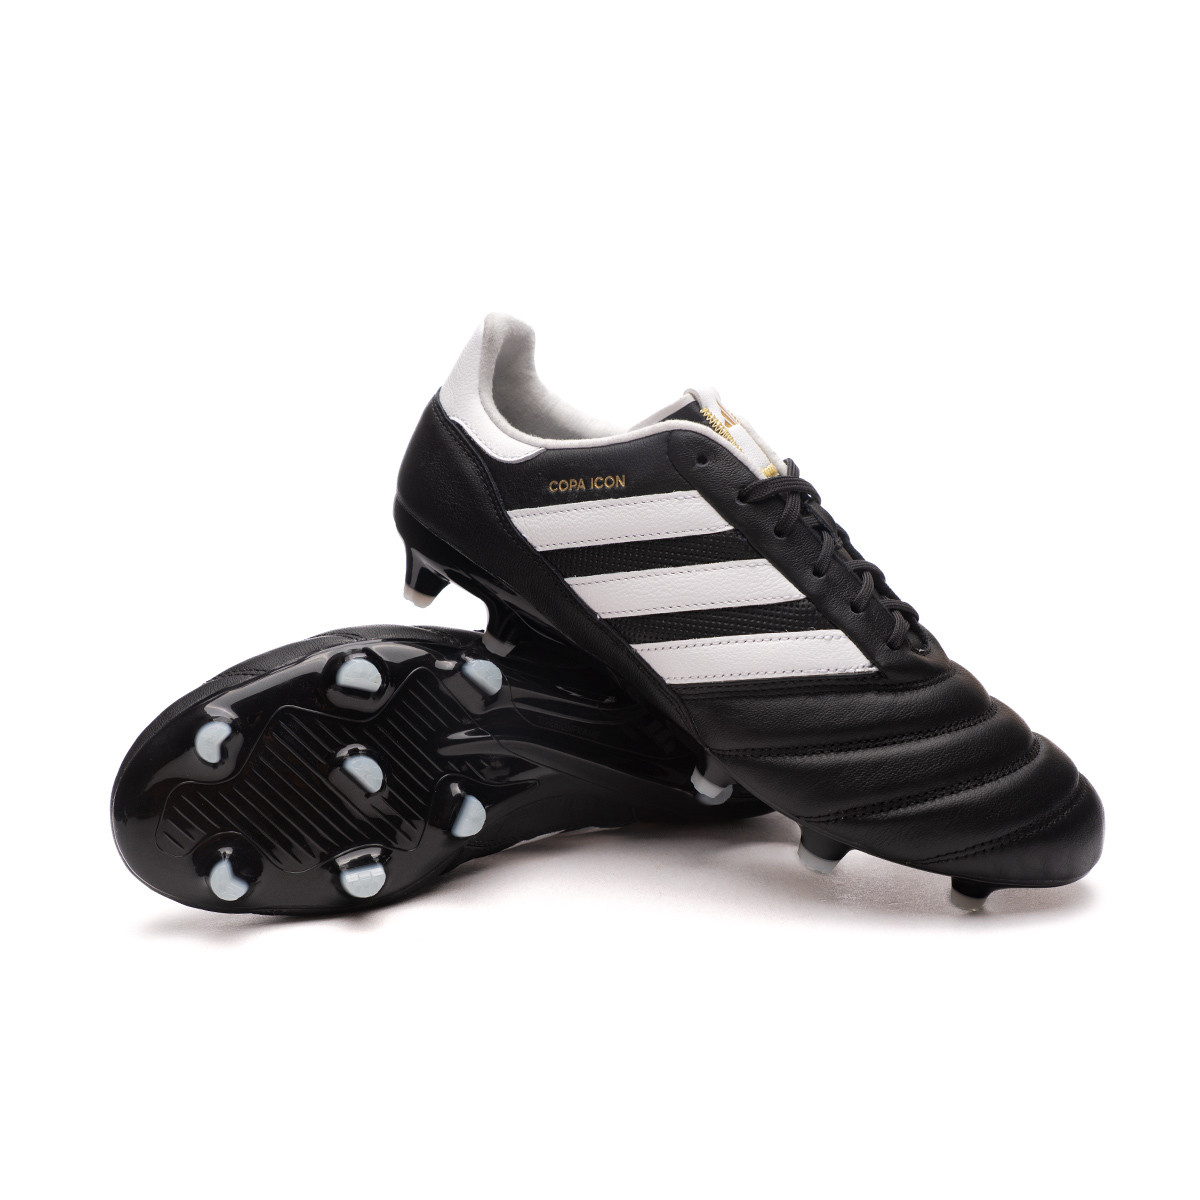 Mantsjoerije Permanent ledematen Football Boots adidas Copa Icon FG Core Black-White-Gold Metallic - Fútbol  Emotion